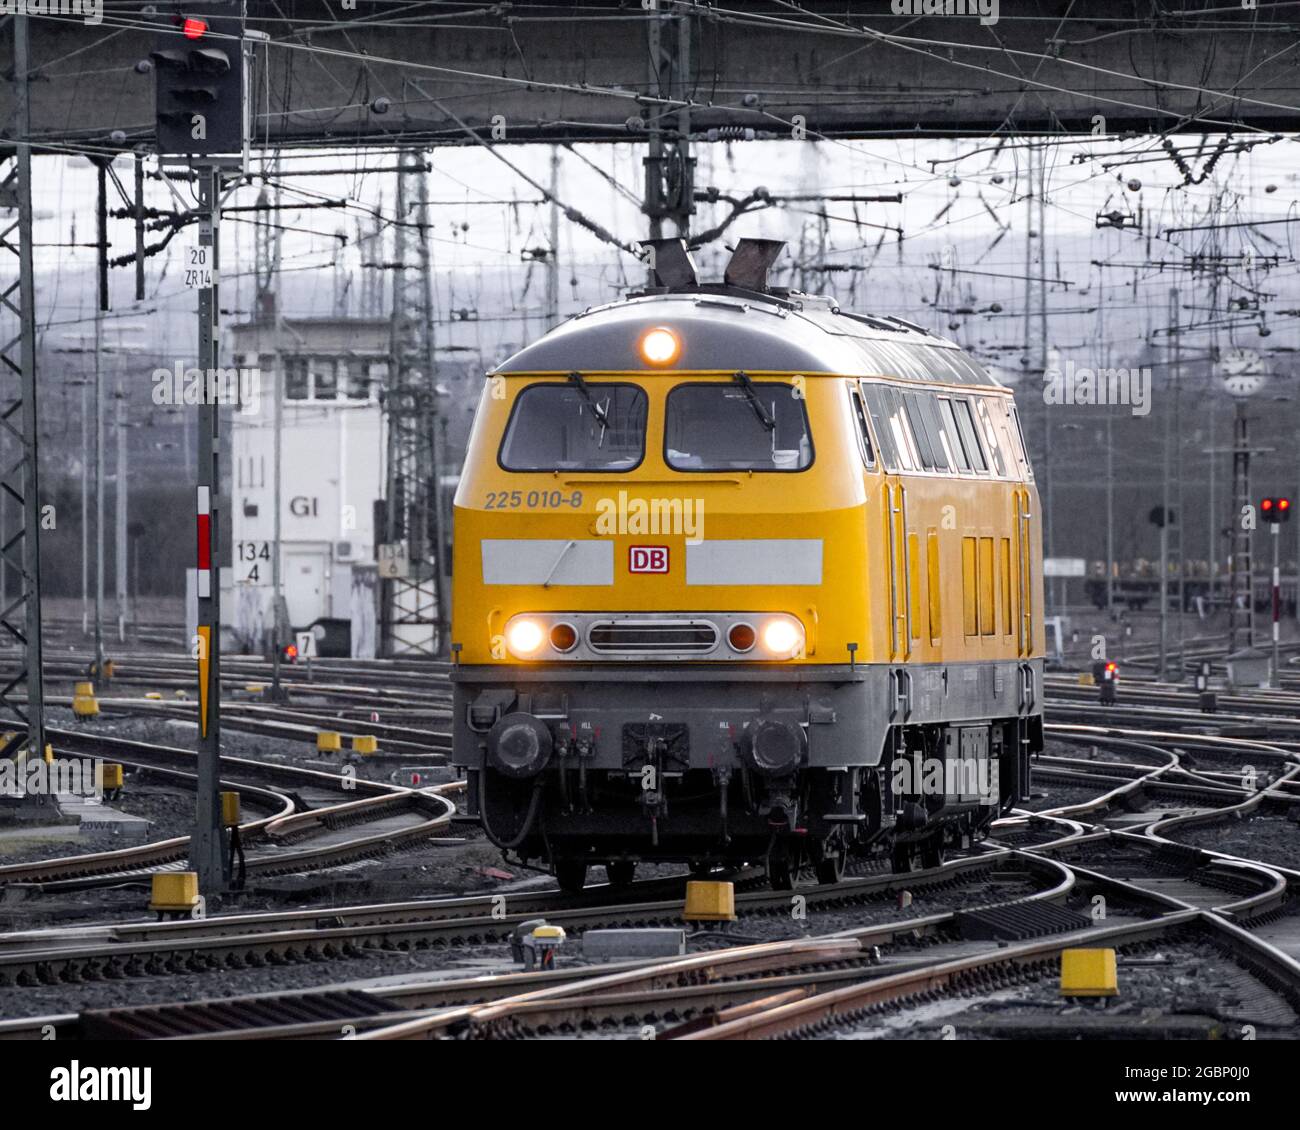 GIESSEN, GERMANY - Mar 19, 2021: A Diesellokomotive 225 010-8 from Deutsche Bahn in Giessen on rail road tracks at a station Stock Photo